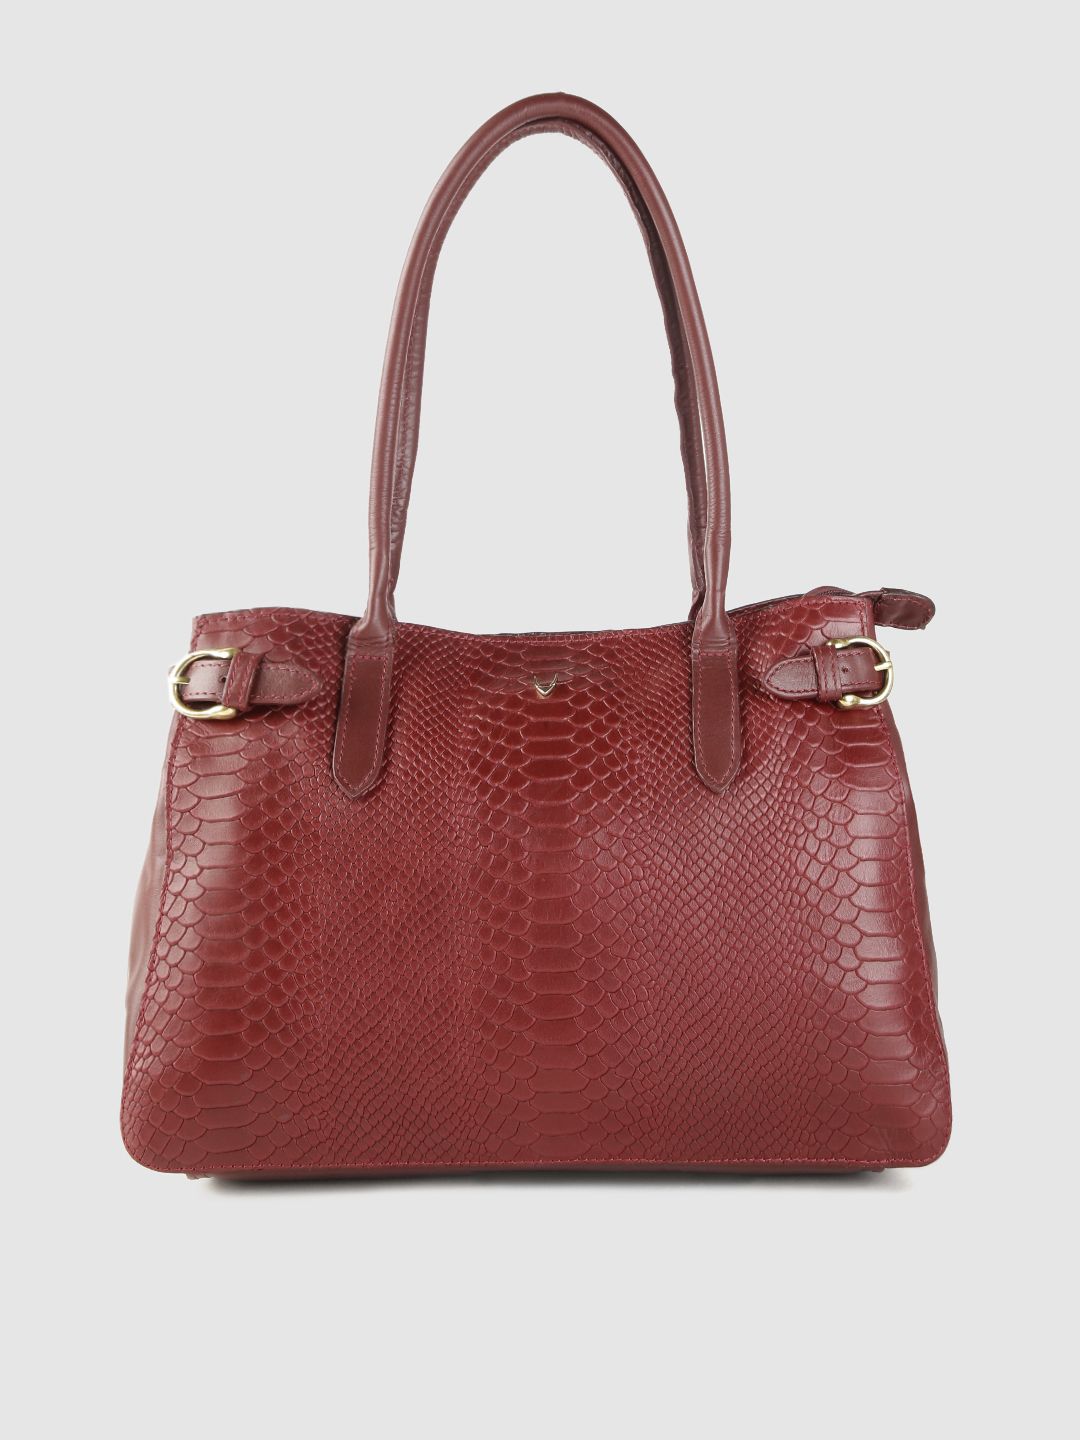 Hidesign Red Textured Shoulder Bag Price in India